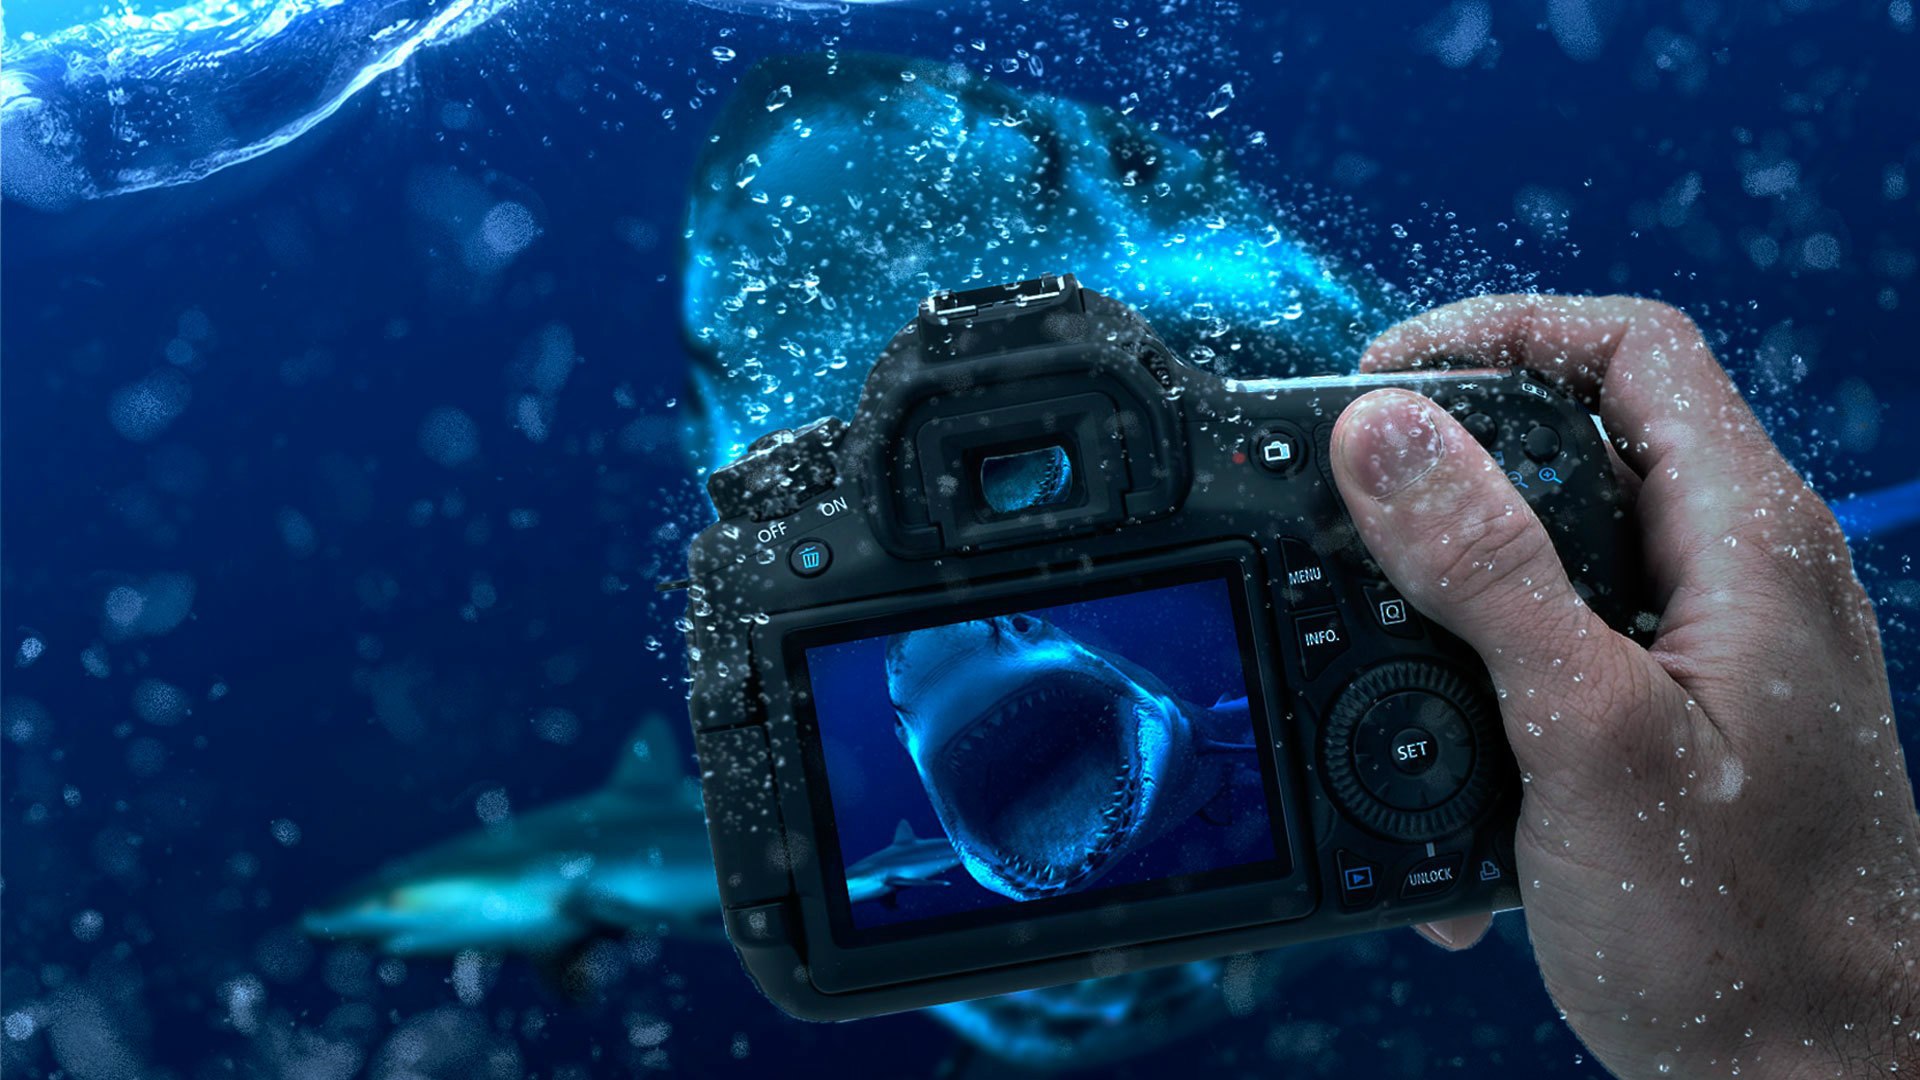 man made, camera, hand, manipulation, shark, underwater